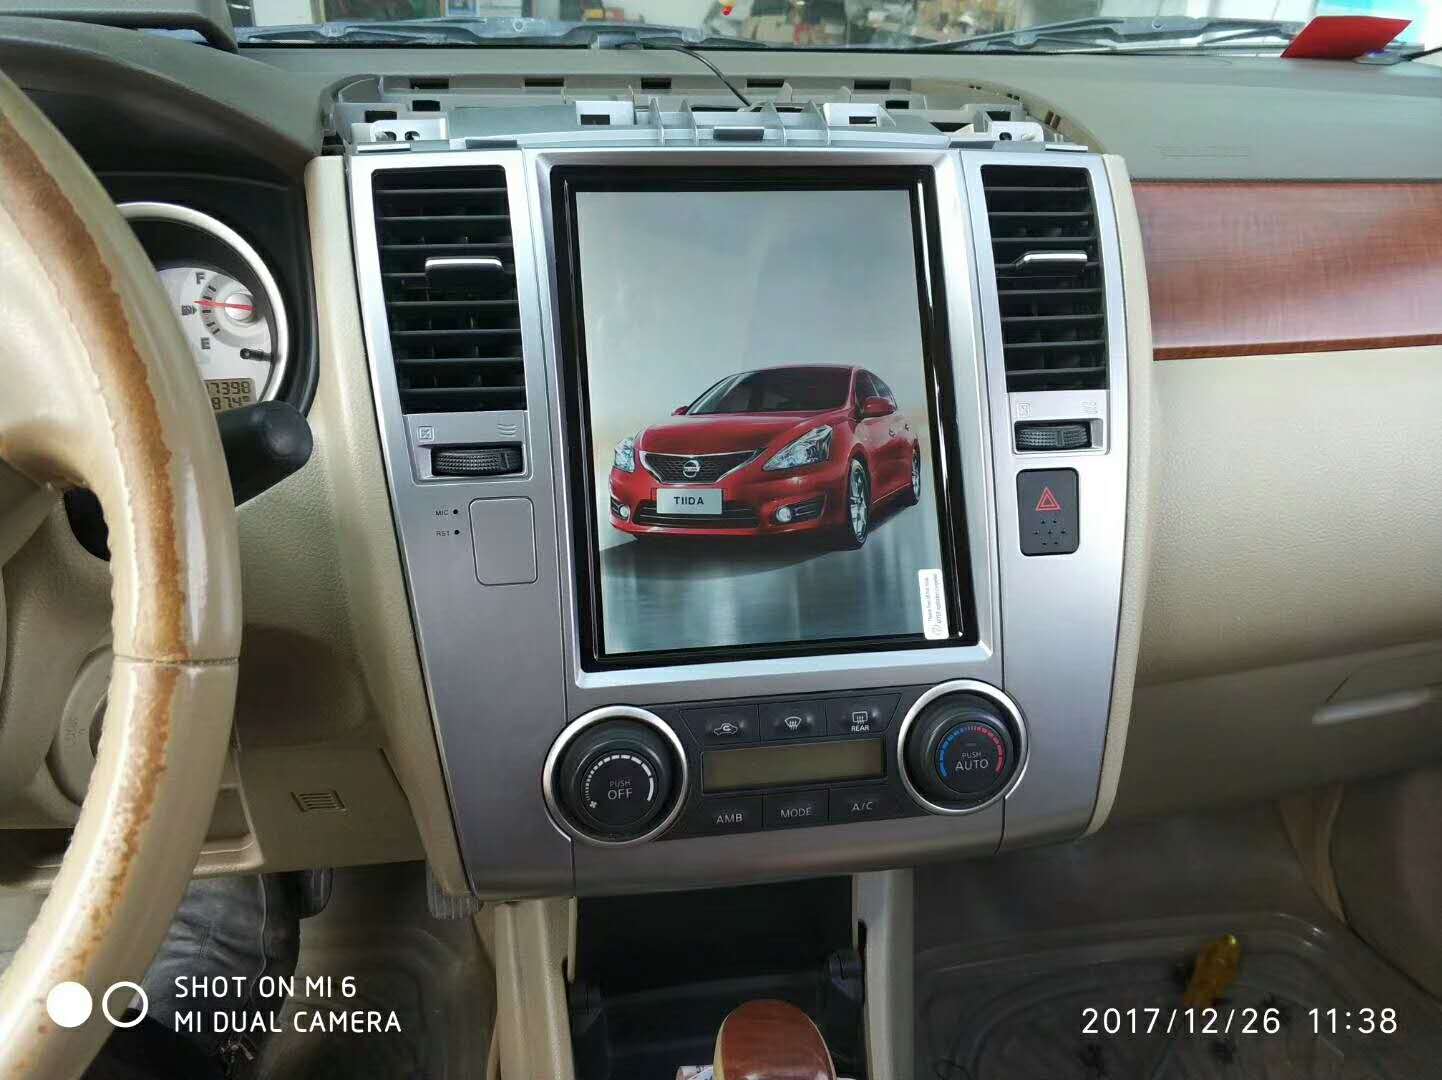 Nissan Versa 2007 - 2012 10.4 Vertical Screen Android Radio Tesla